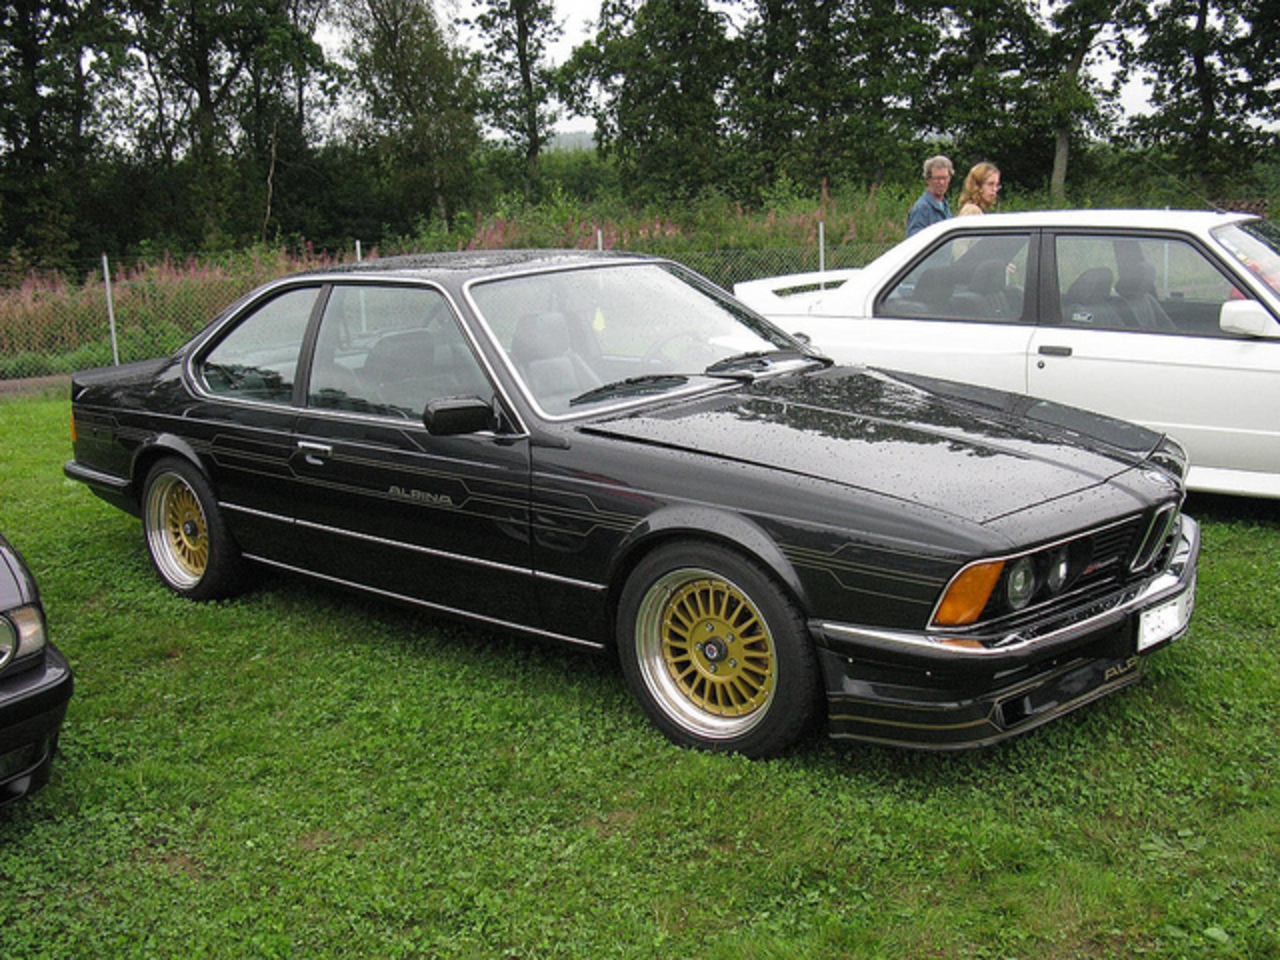 BMW Alpina B7 Turbo Coupe | Flickr - Photo Sharing!